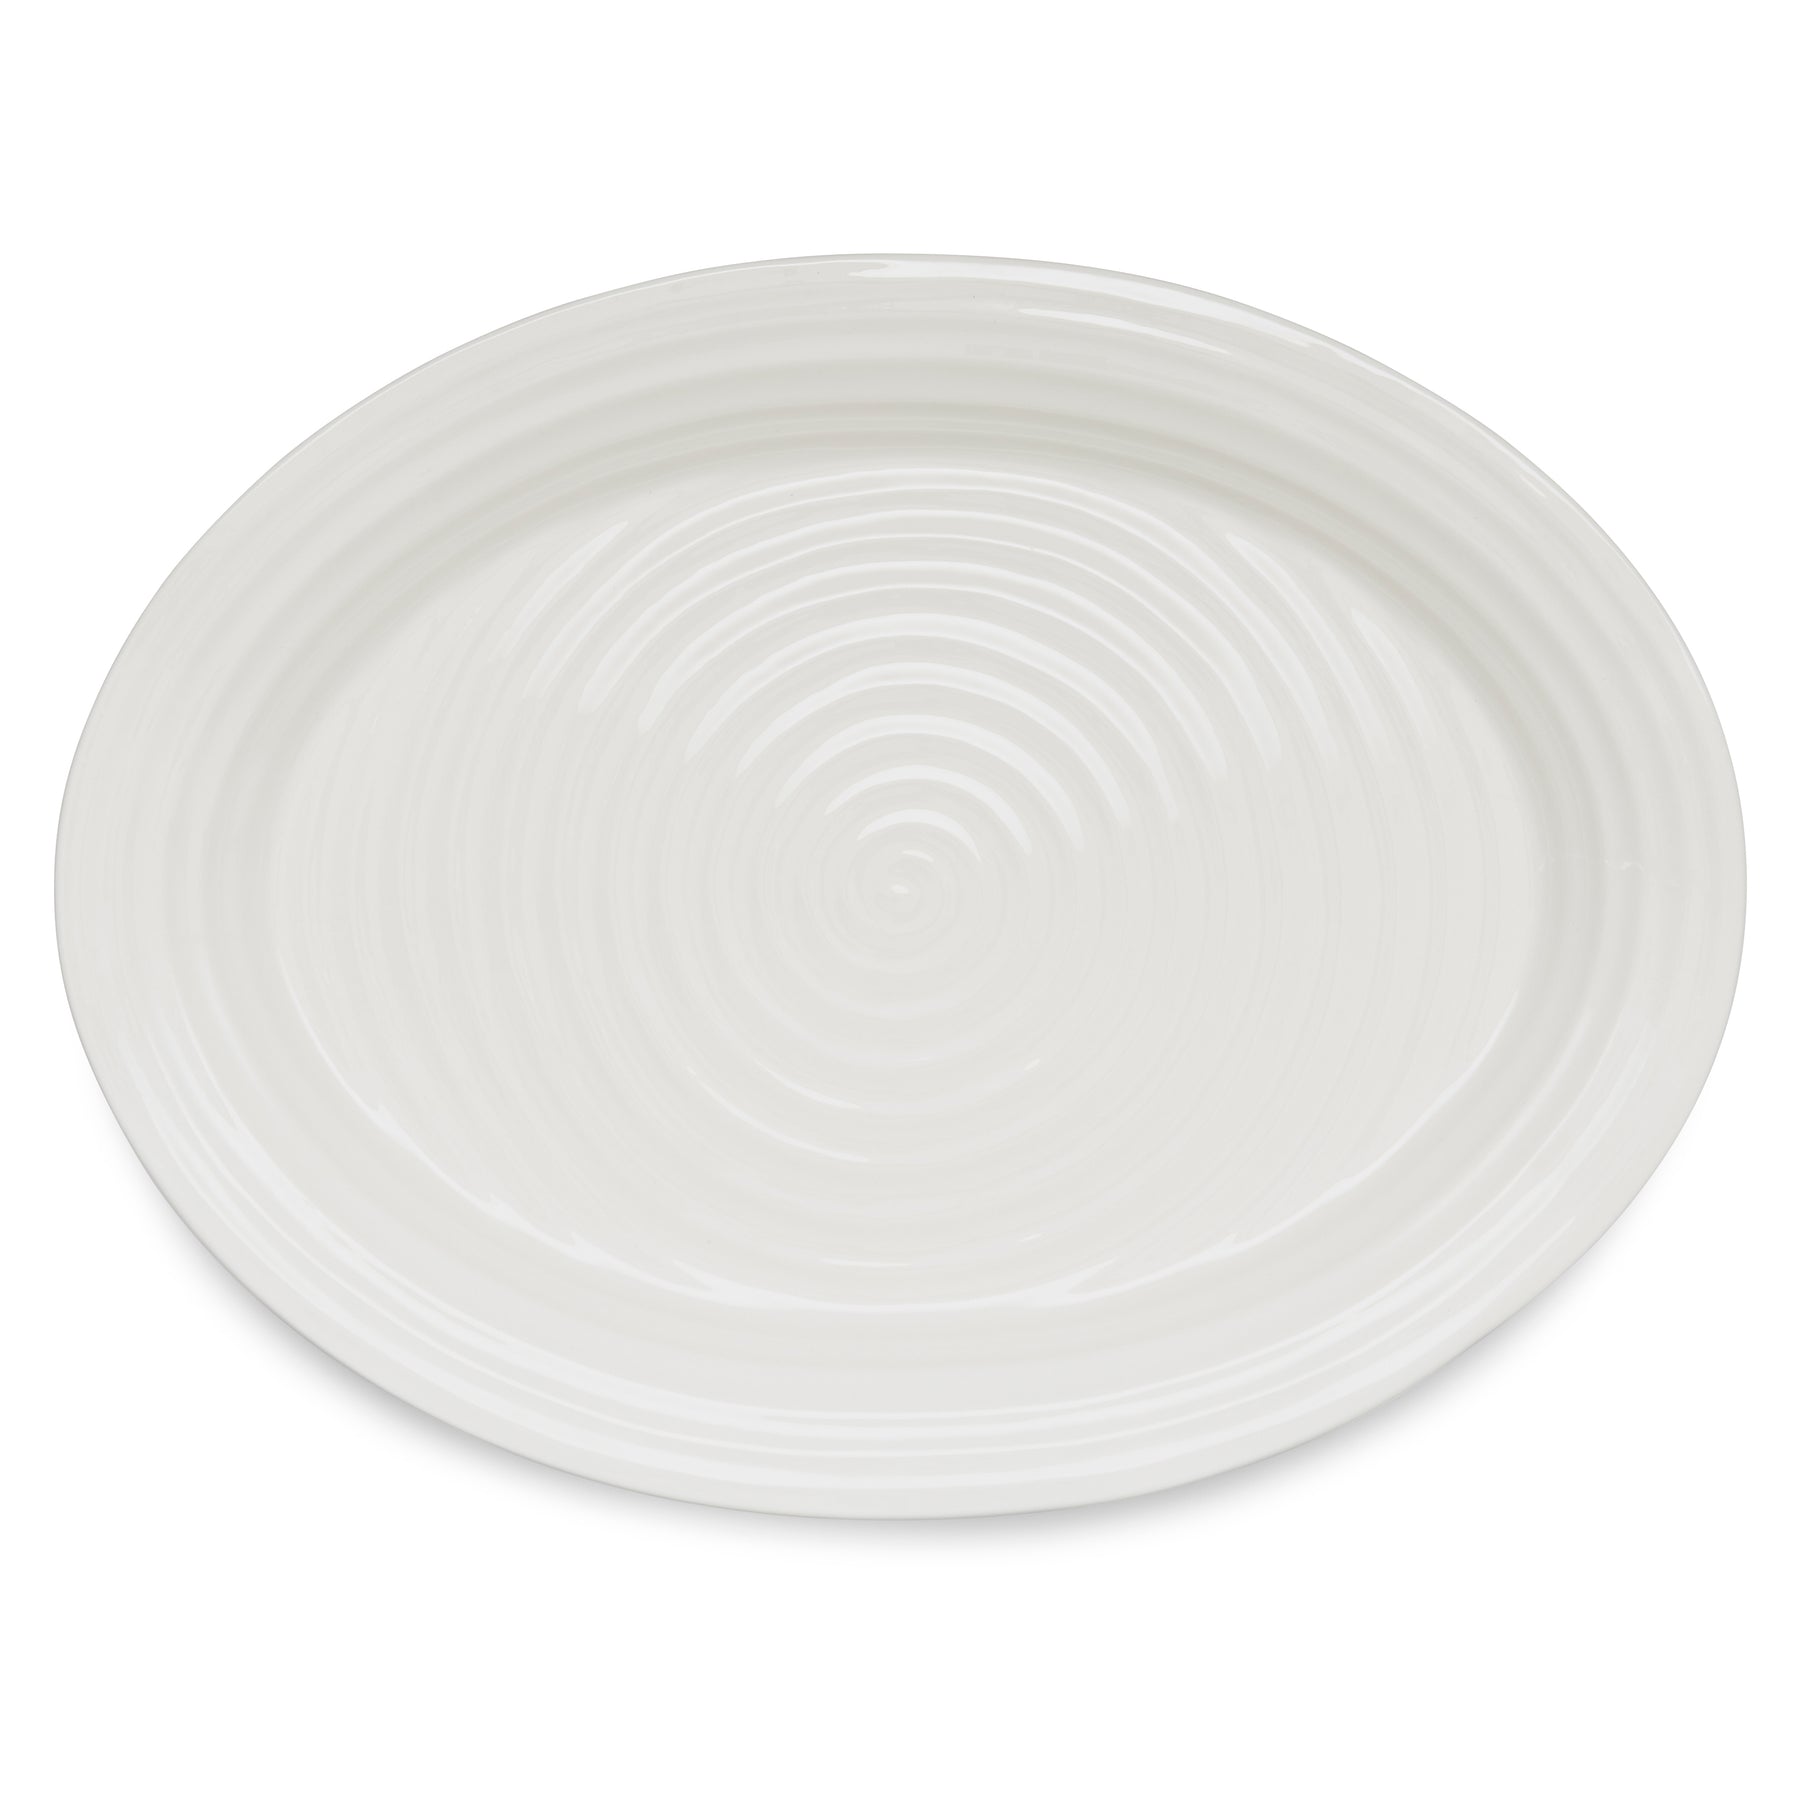 Portmeirion Sophie Conran White Large Oval Platter - Porcelain